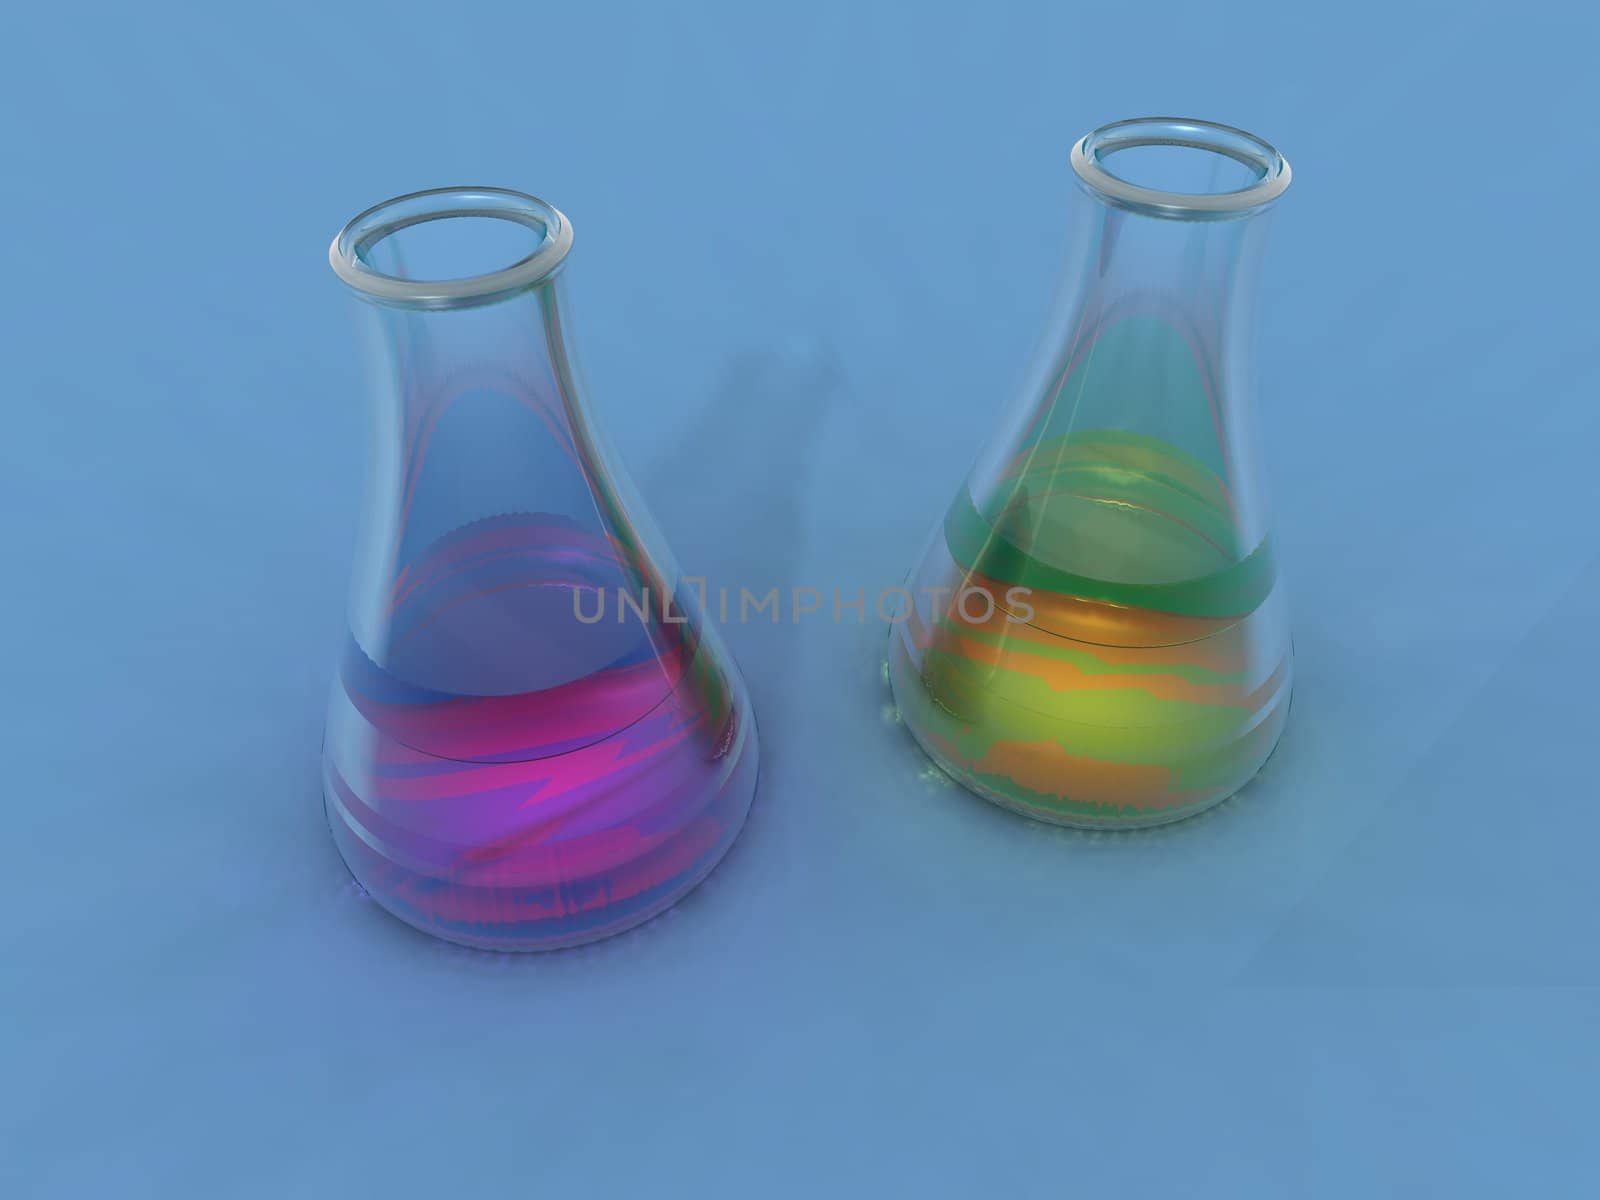 chemistry material by jbouzou